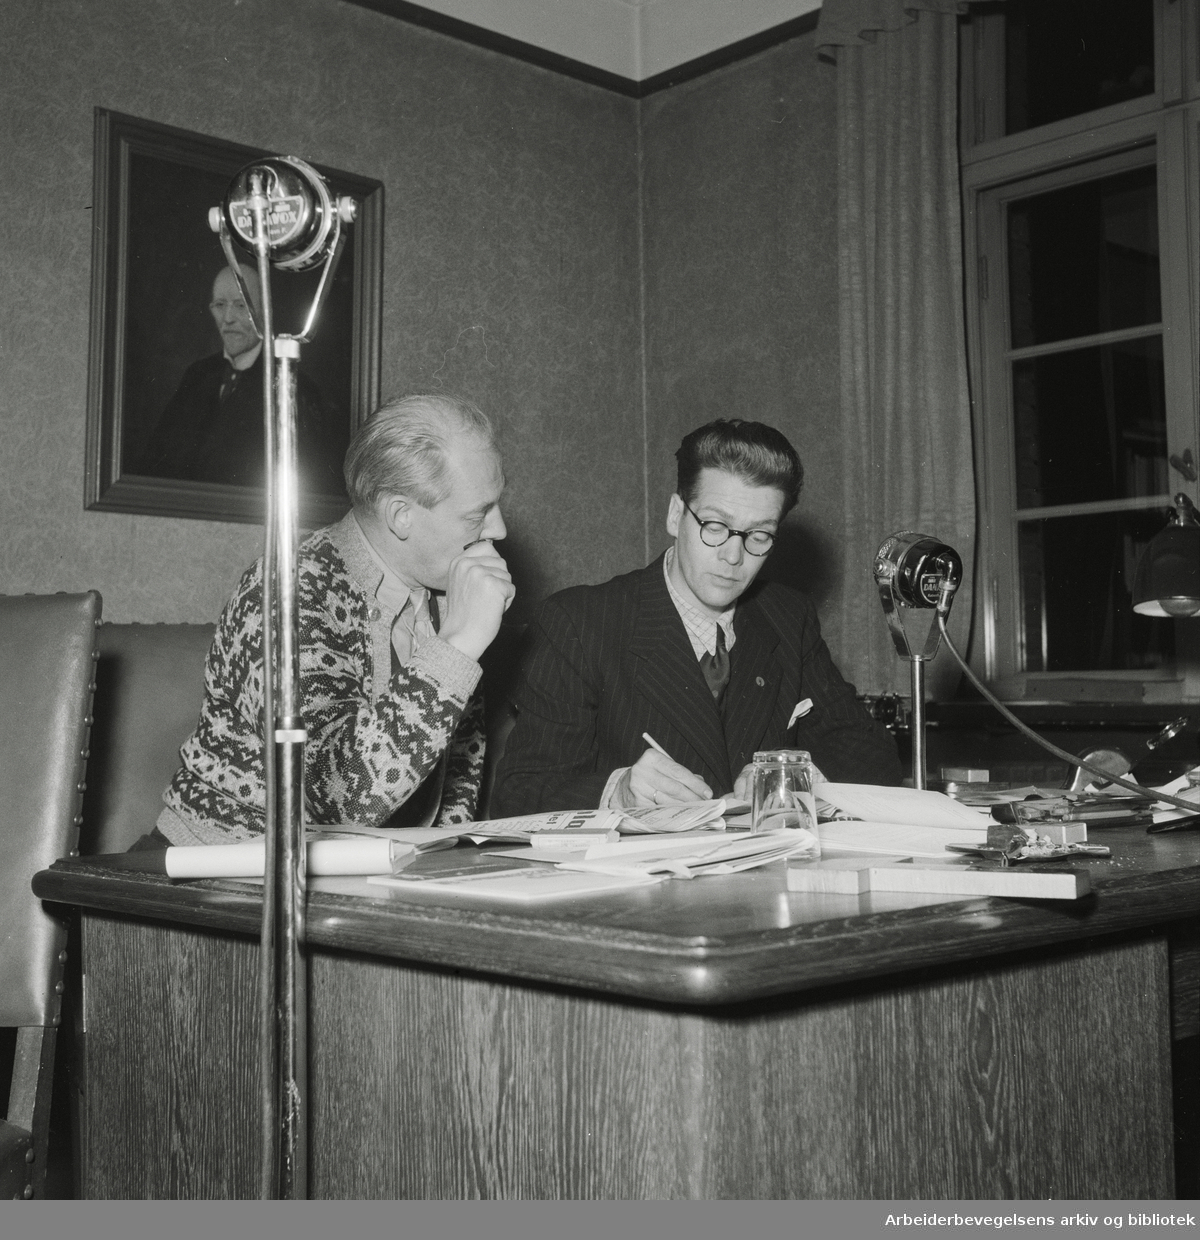 Arbeiderbladets journalister Ola Brandtstorp og Kåre Haugen på valgnatta 1945. Antatt i forbindelse med en valgsending.